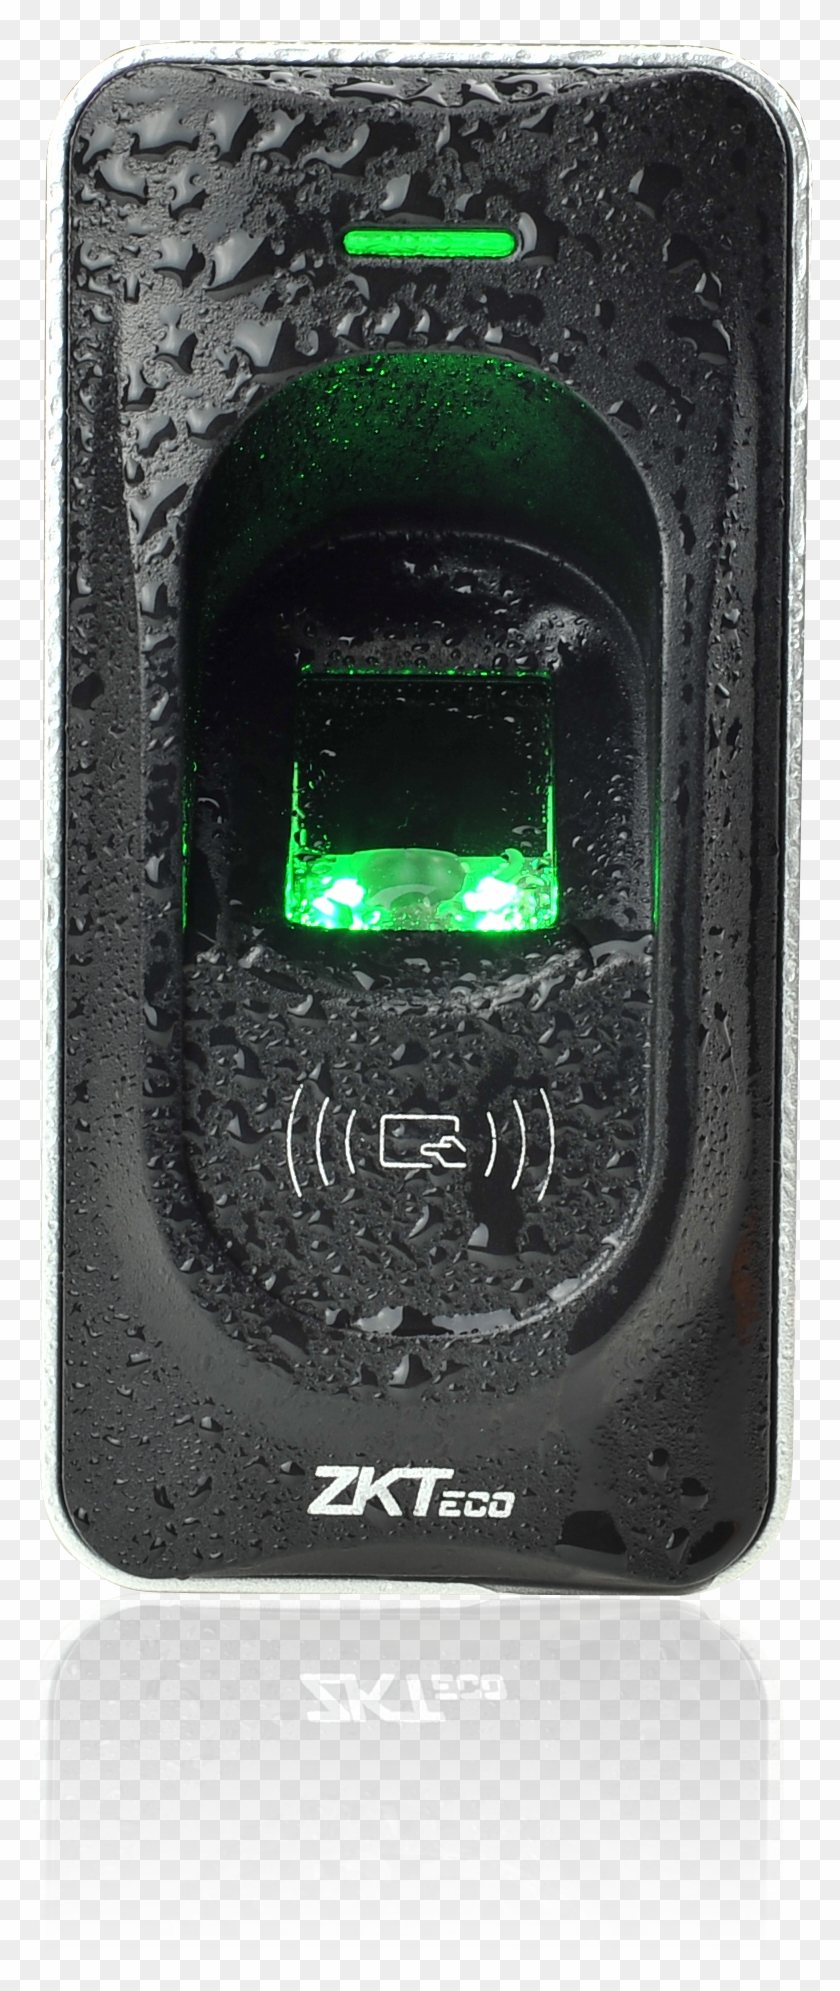 Fr1200 Fingerprint Rf Card Reader With Biometric Access - Zk Fr1200 Clipart